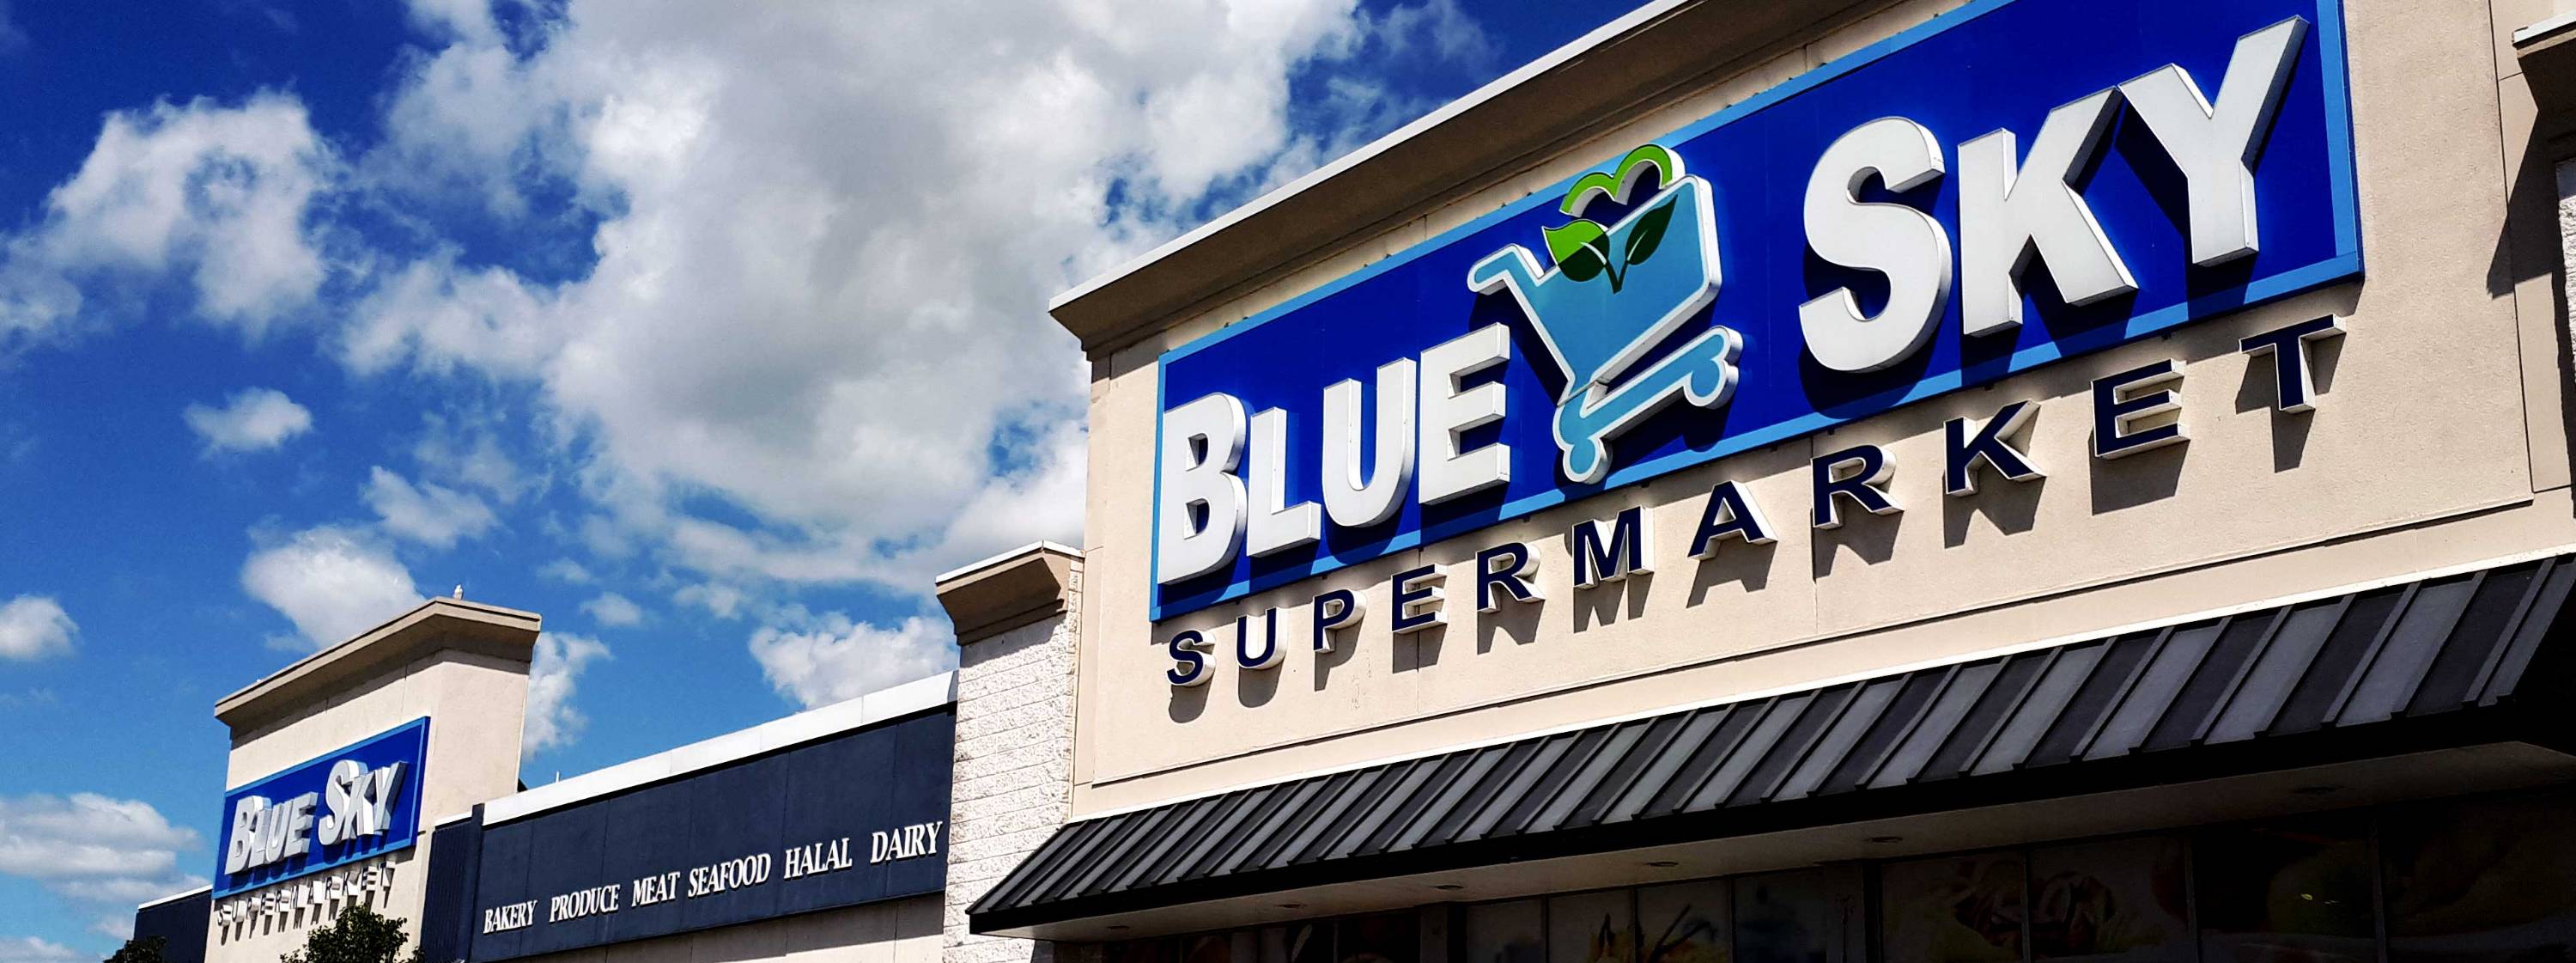 Blue Sky Supermarket - Asian Food Store